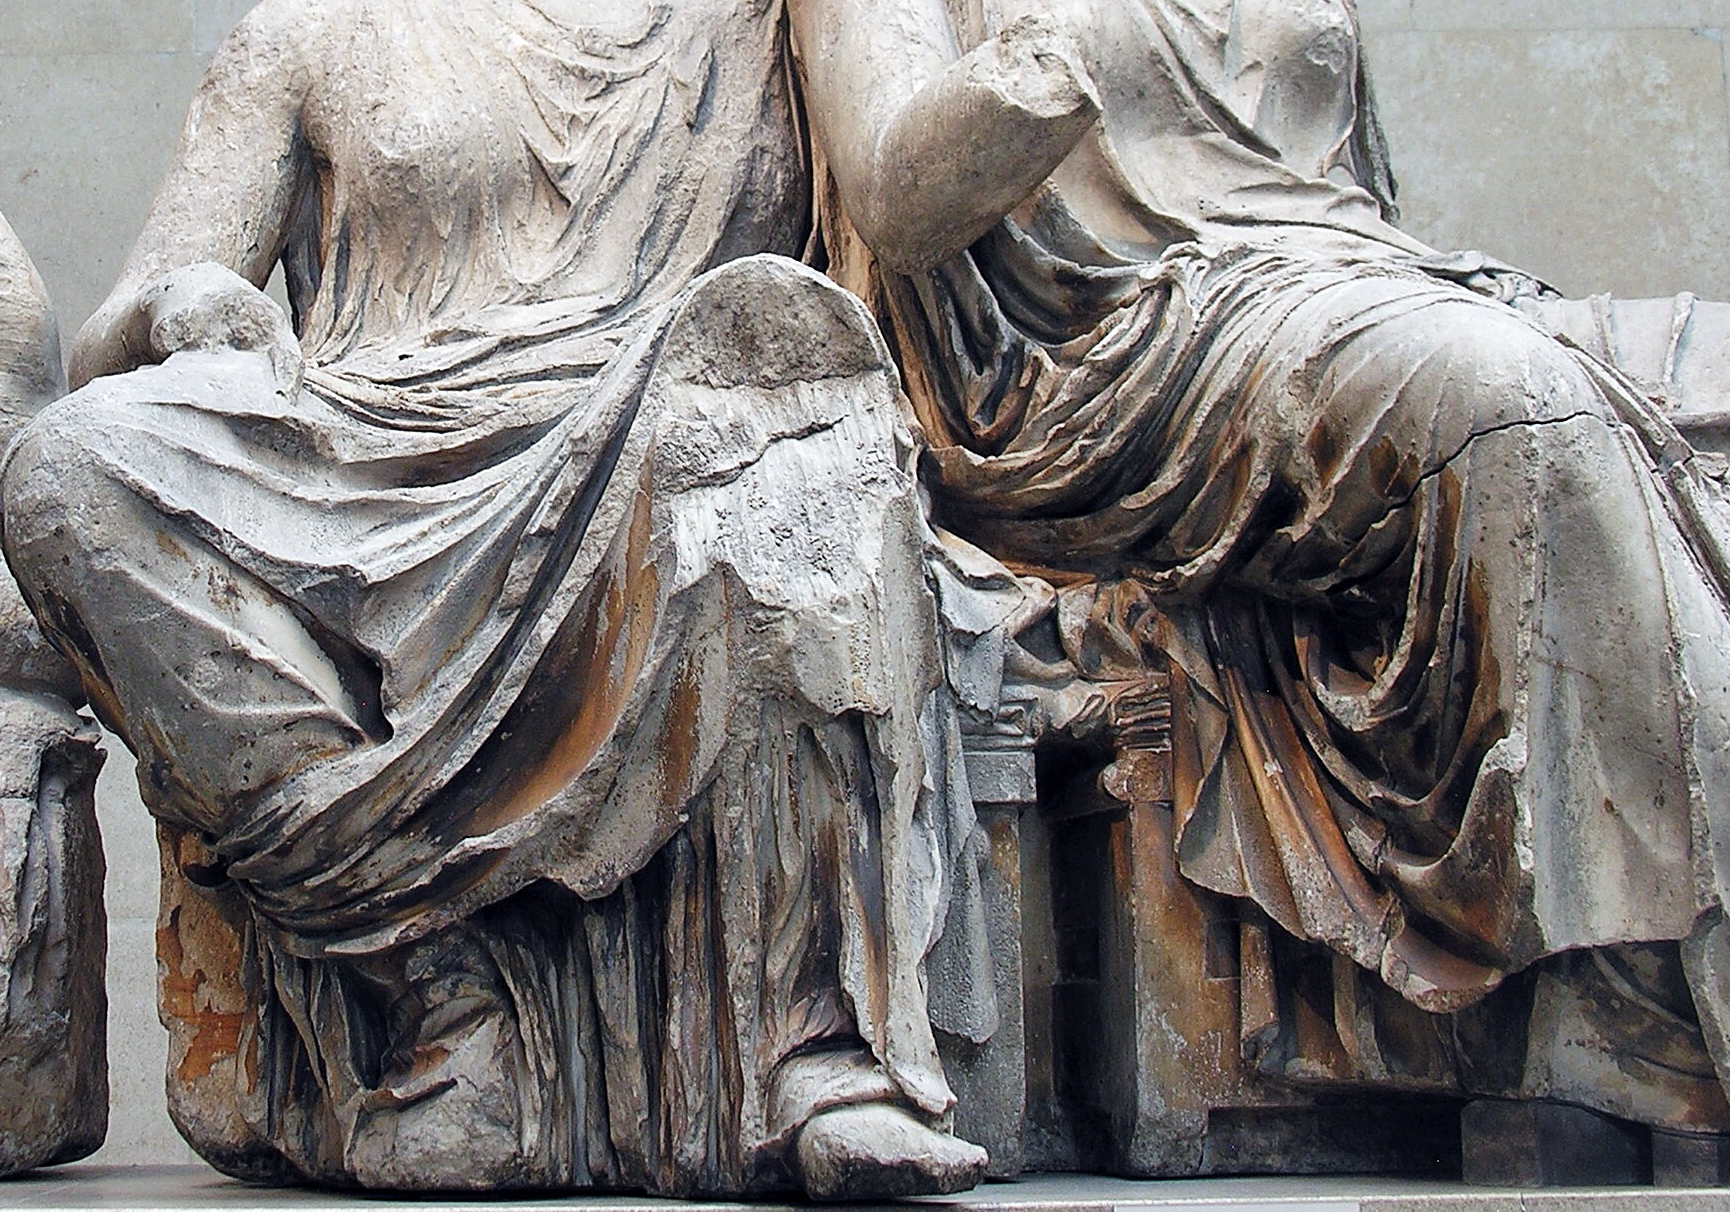 Phidias (?), Sculpture from the east pediment of the Parthenon, marble, c. 448-432 B.C.E. (British Museum, London)